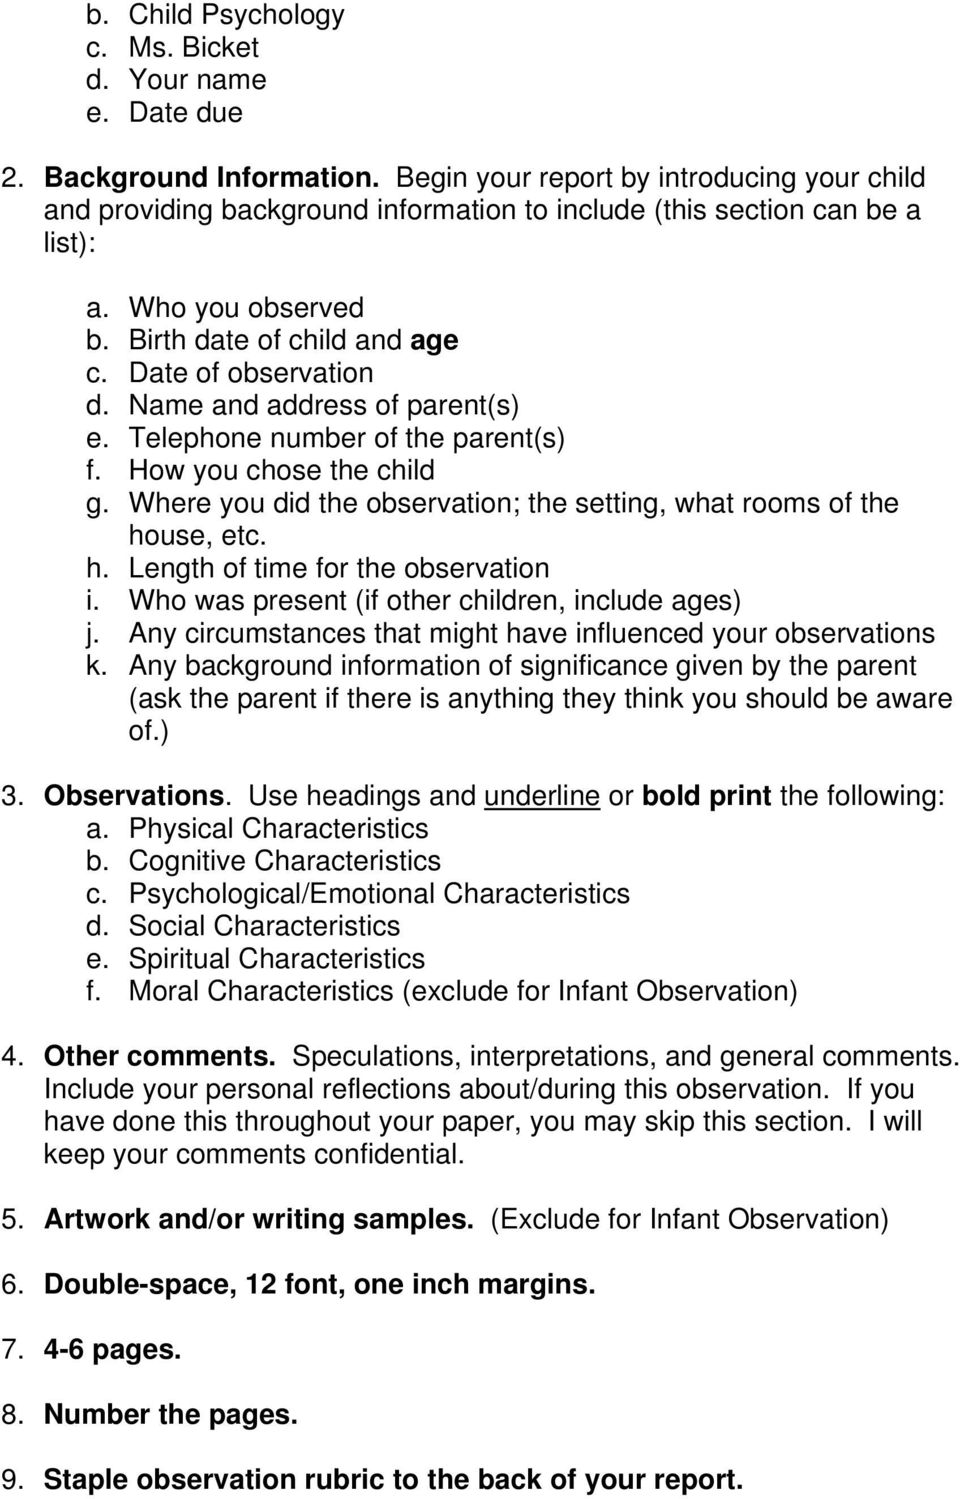 CHILD PSYCHOLOGY OBSERVATION REPORTS - PDF Free Download